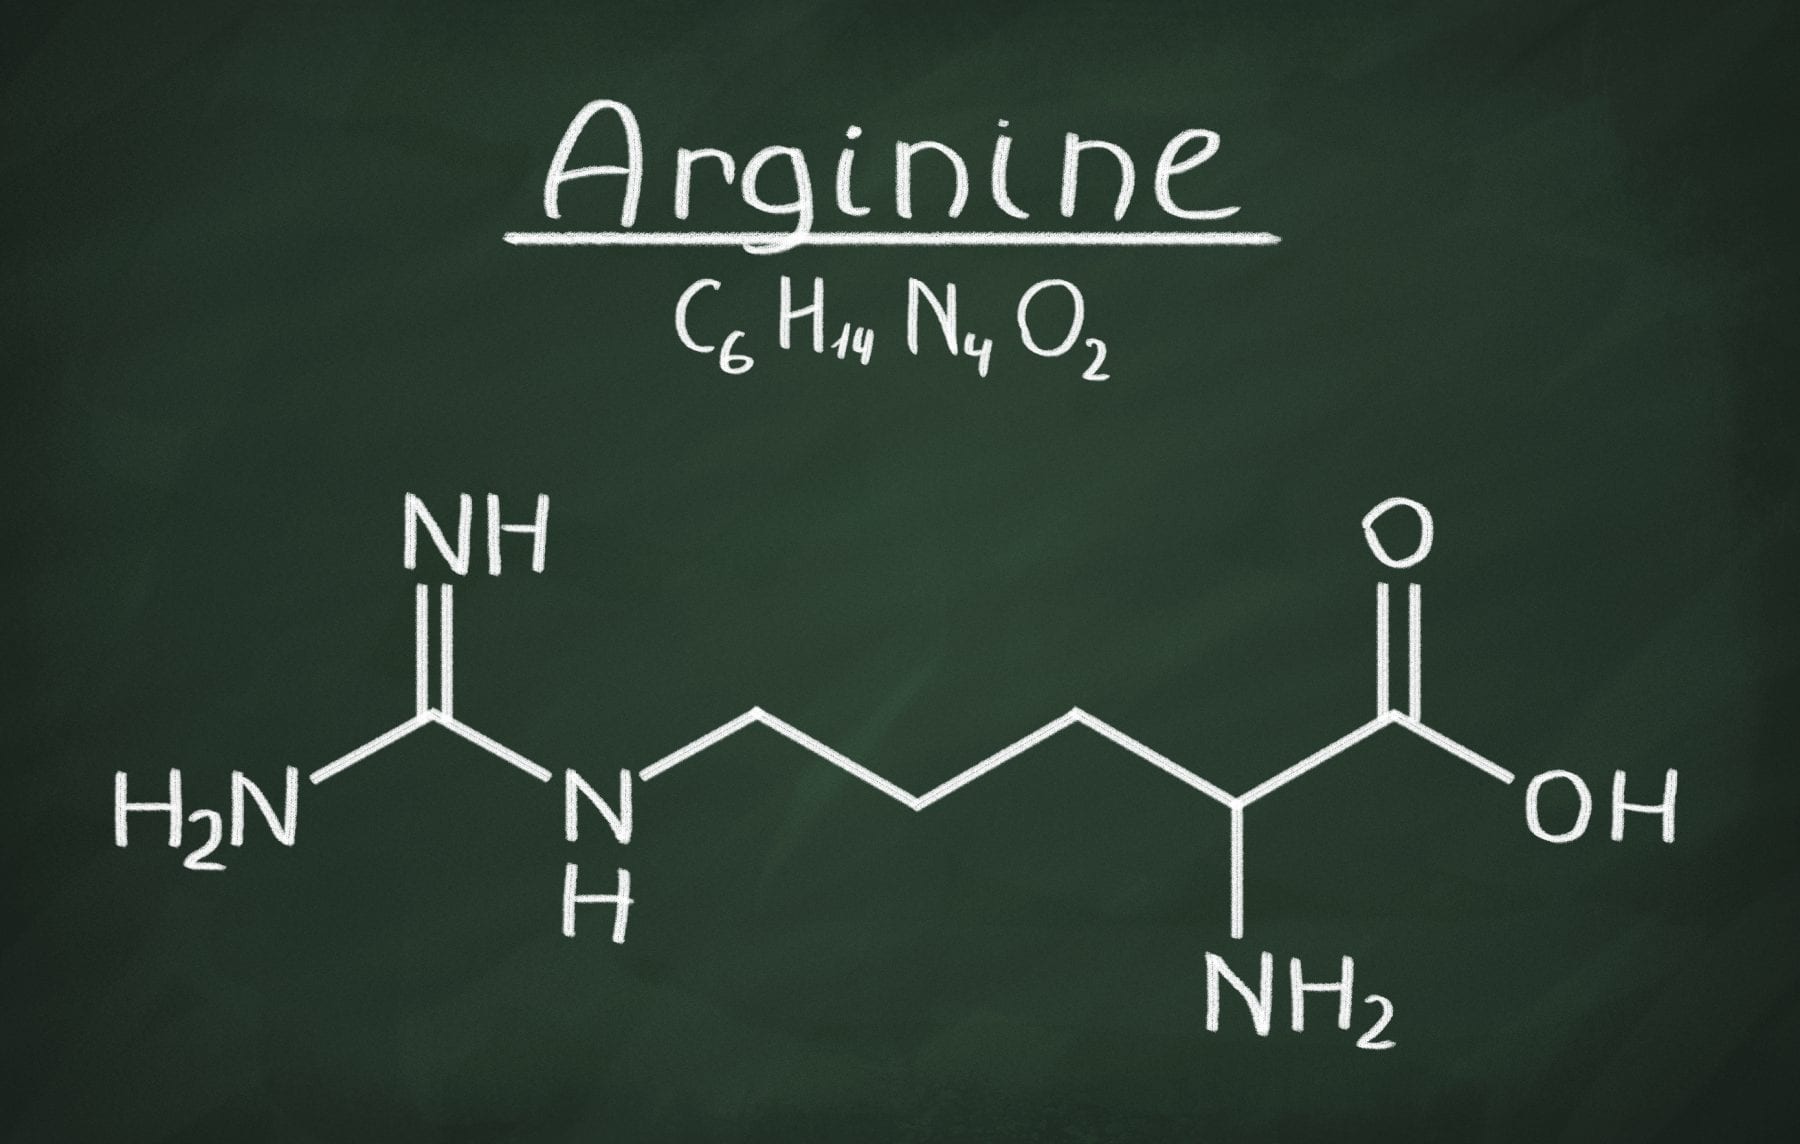 Arginine helps blood flow, kidney function, boost immune system, insulin sensitivity,  cardiovascular health, and facilitate erections.